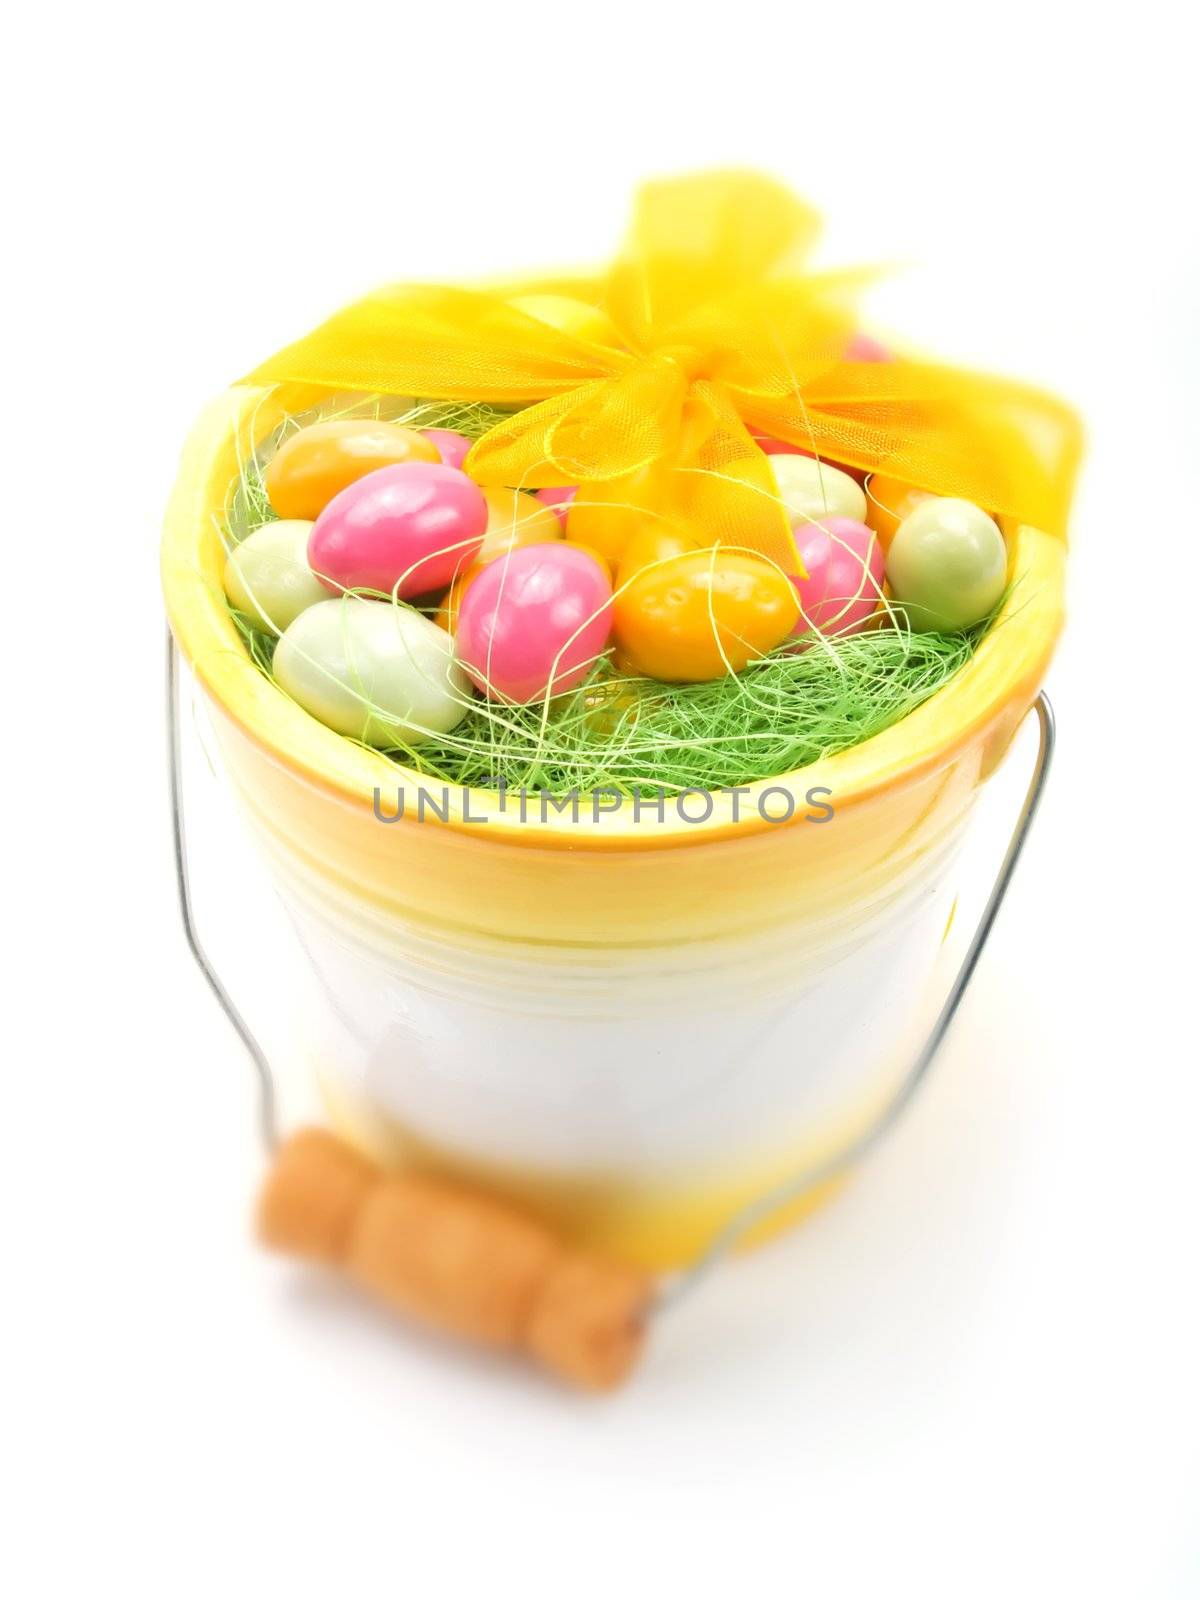 Easter eggs by henrischmit